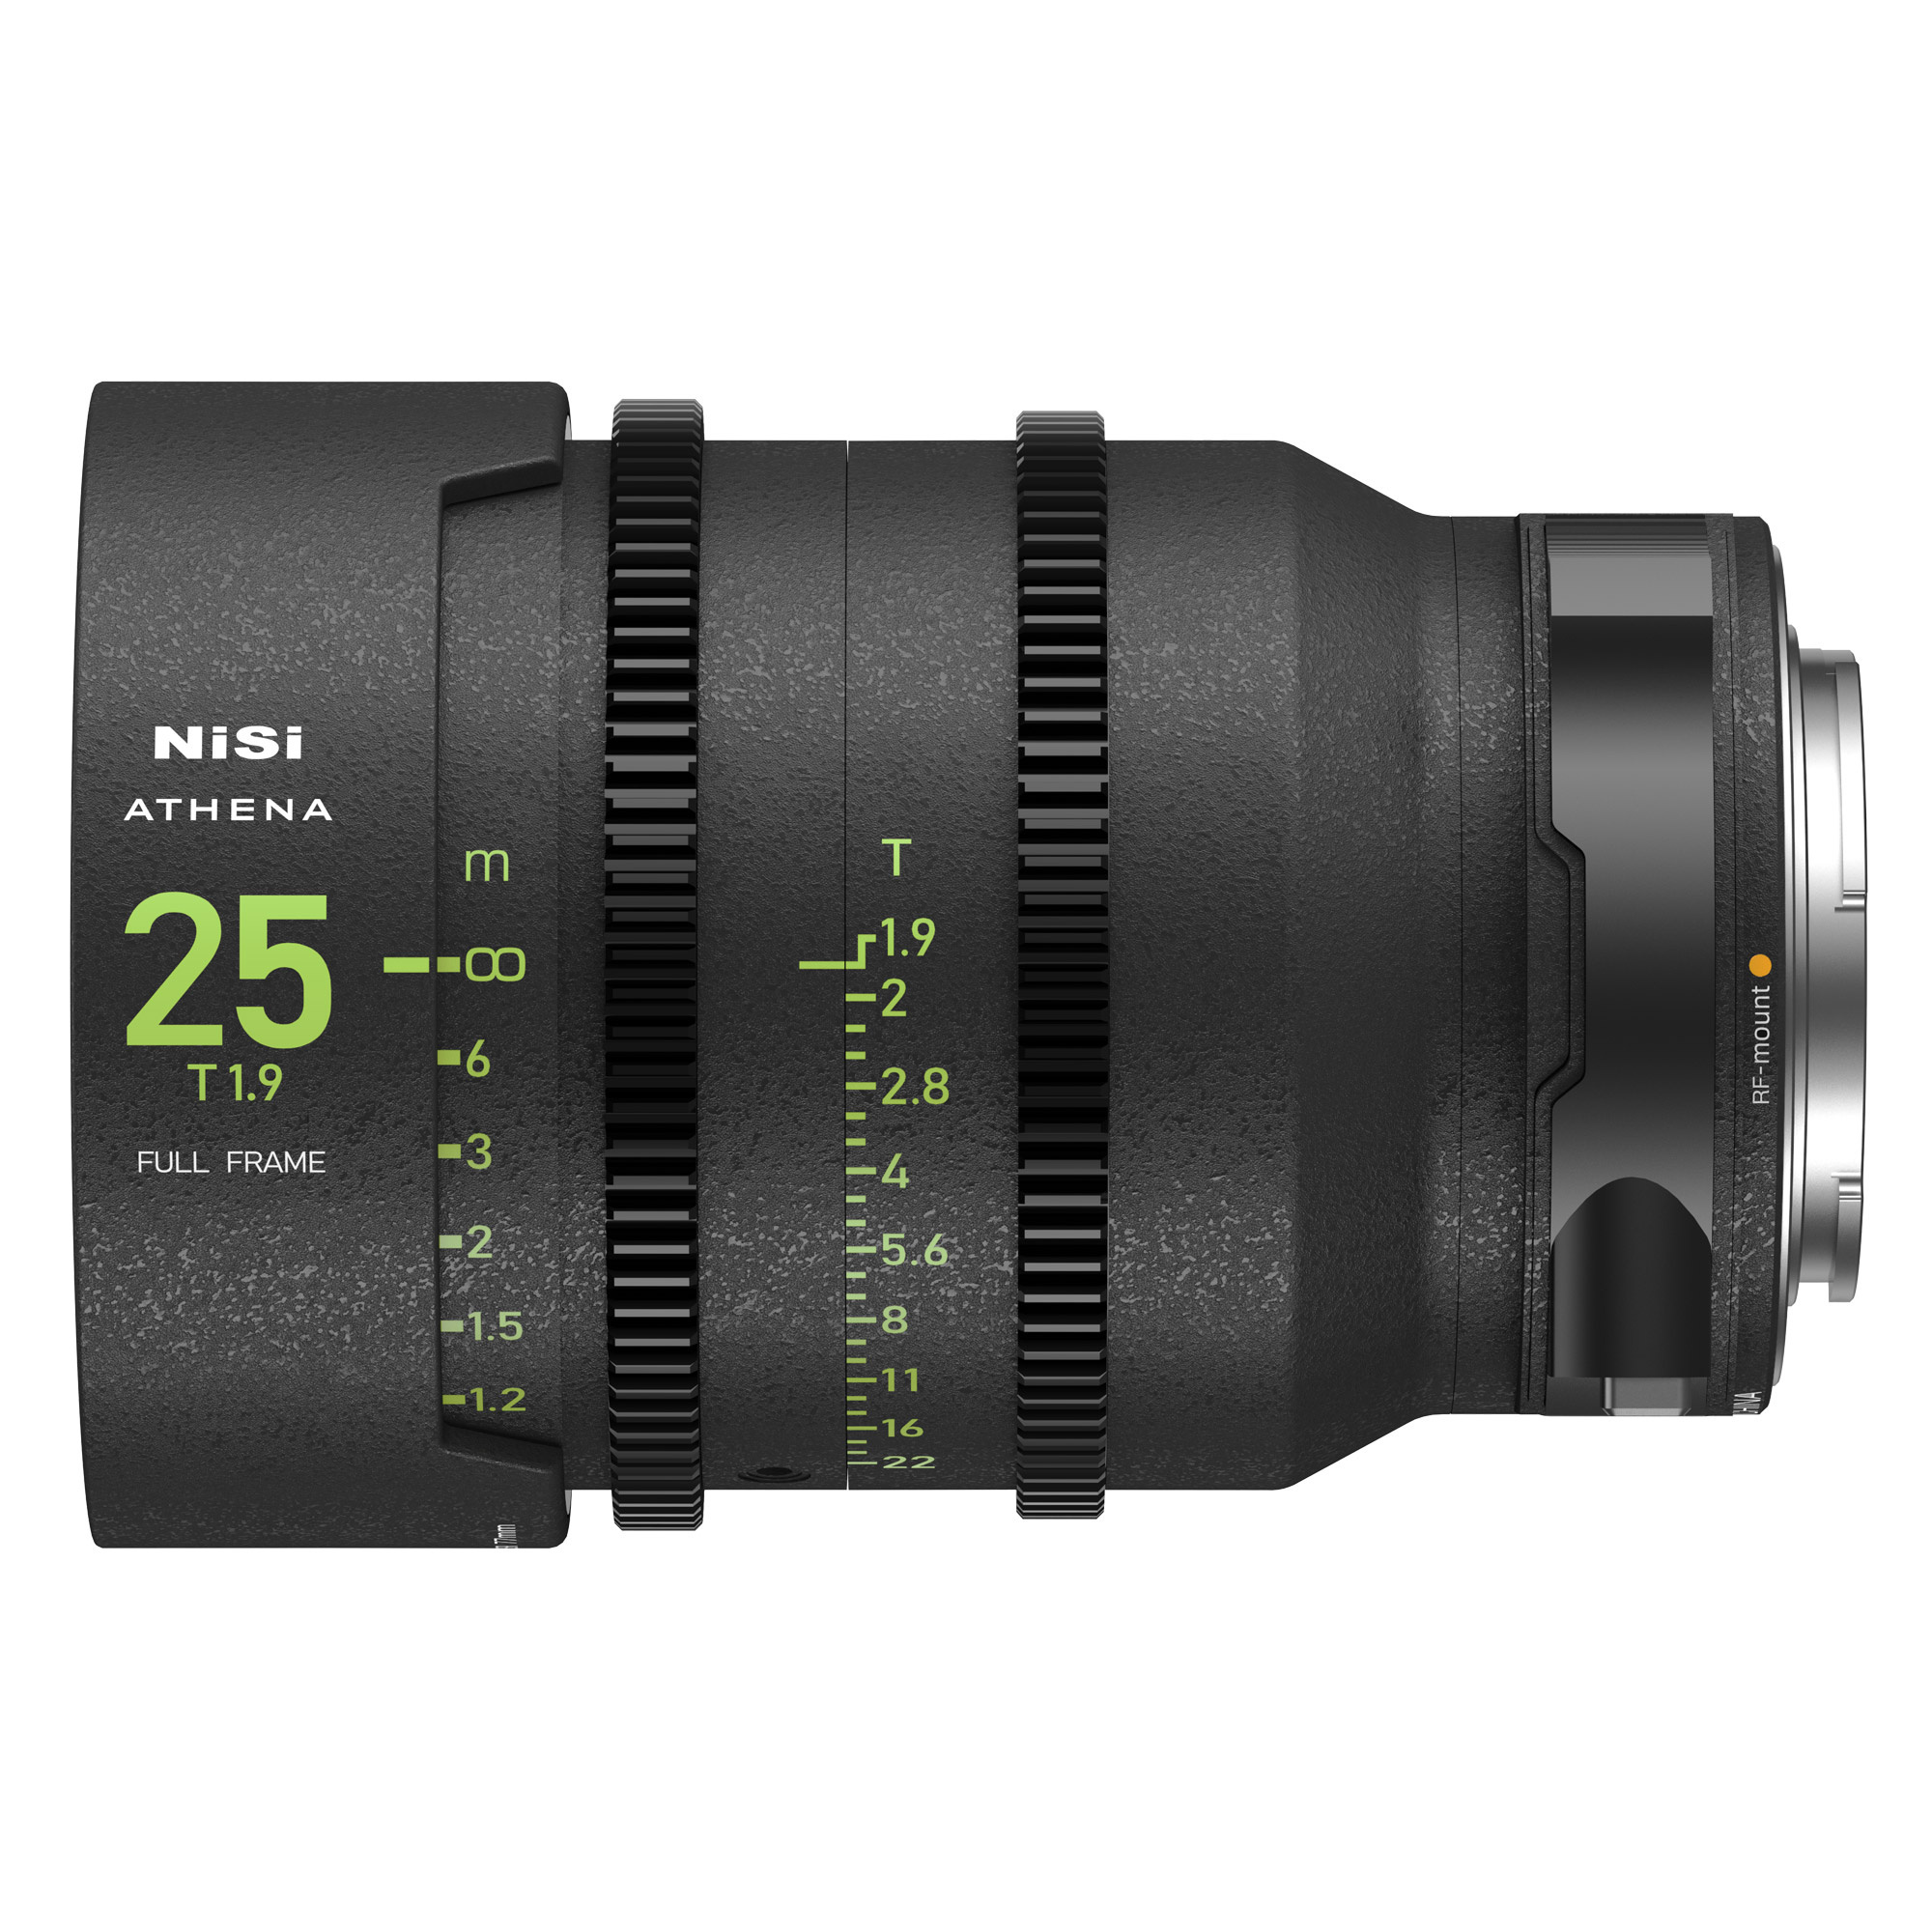 NiSi ATHENA PRIME 25mm T1.9 Full-Frame Lens (RF Mount)